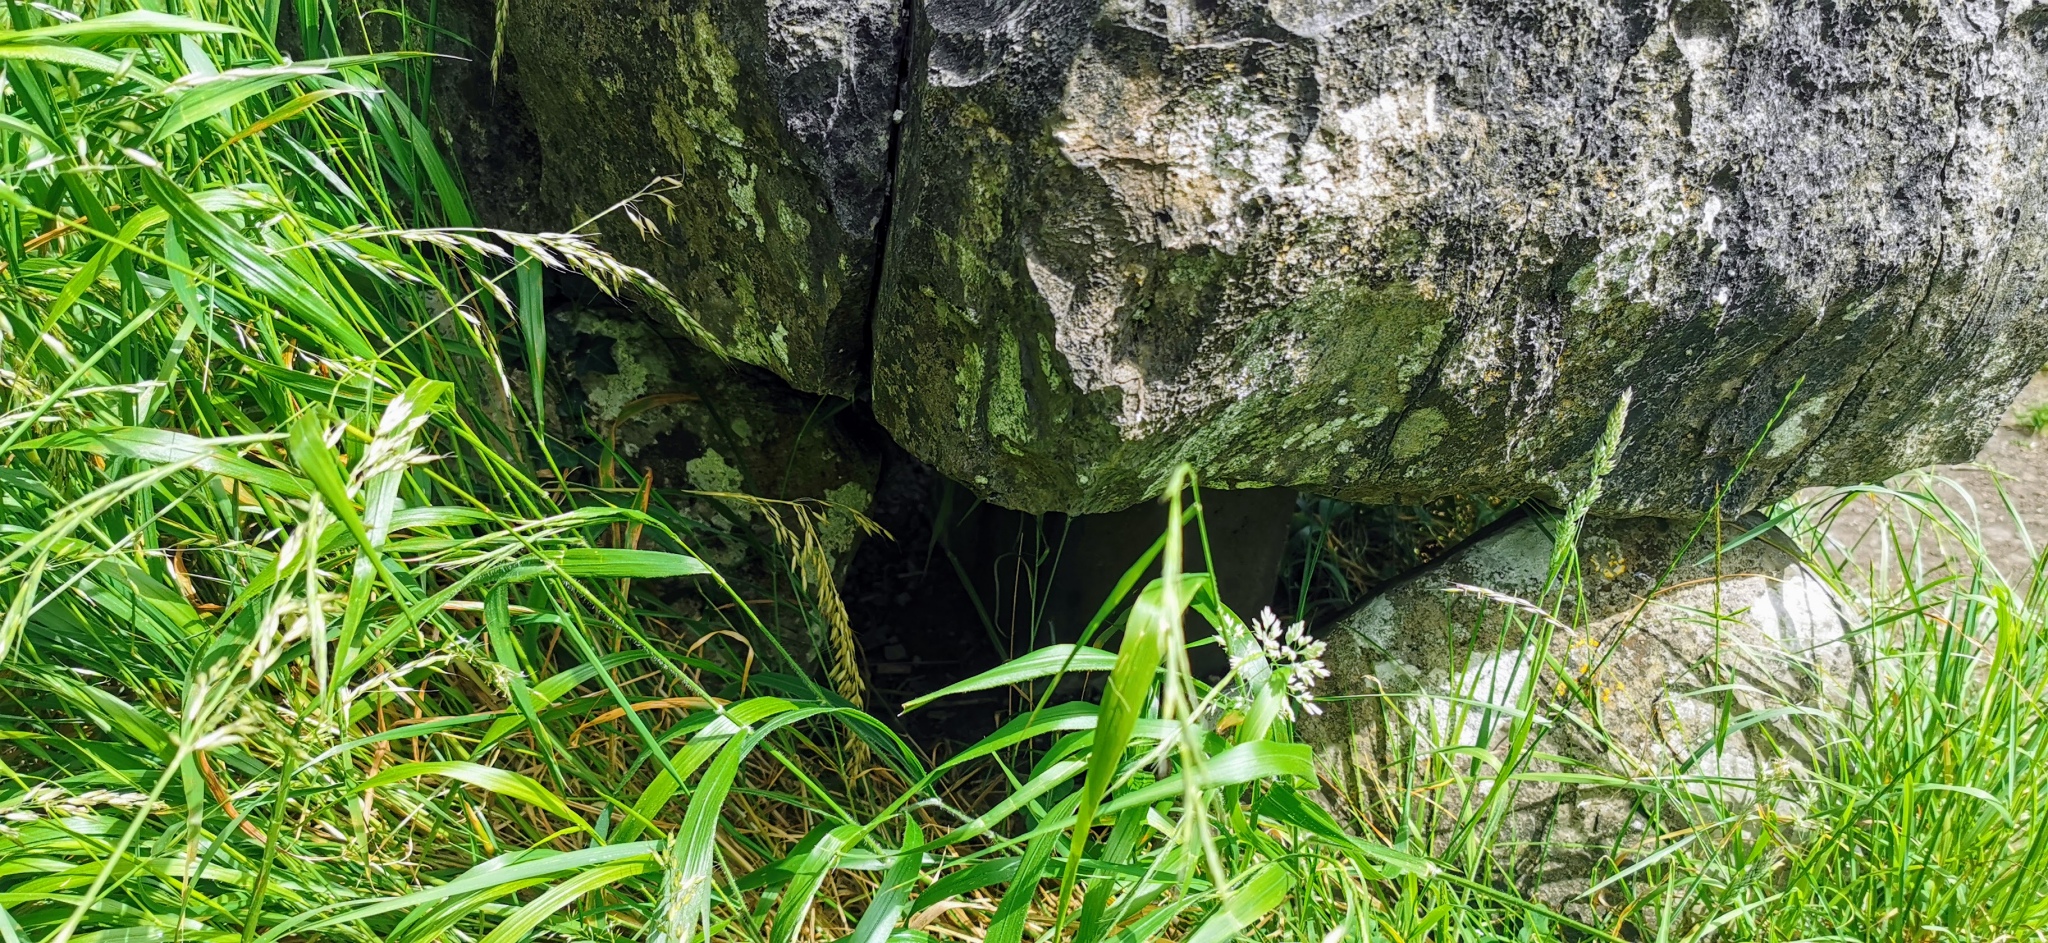 Knockmaree dolmen